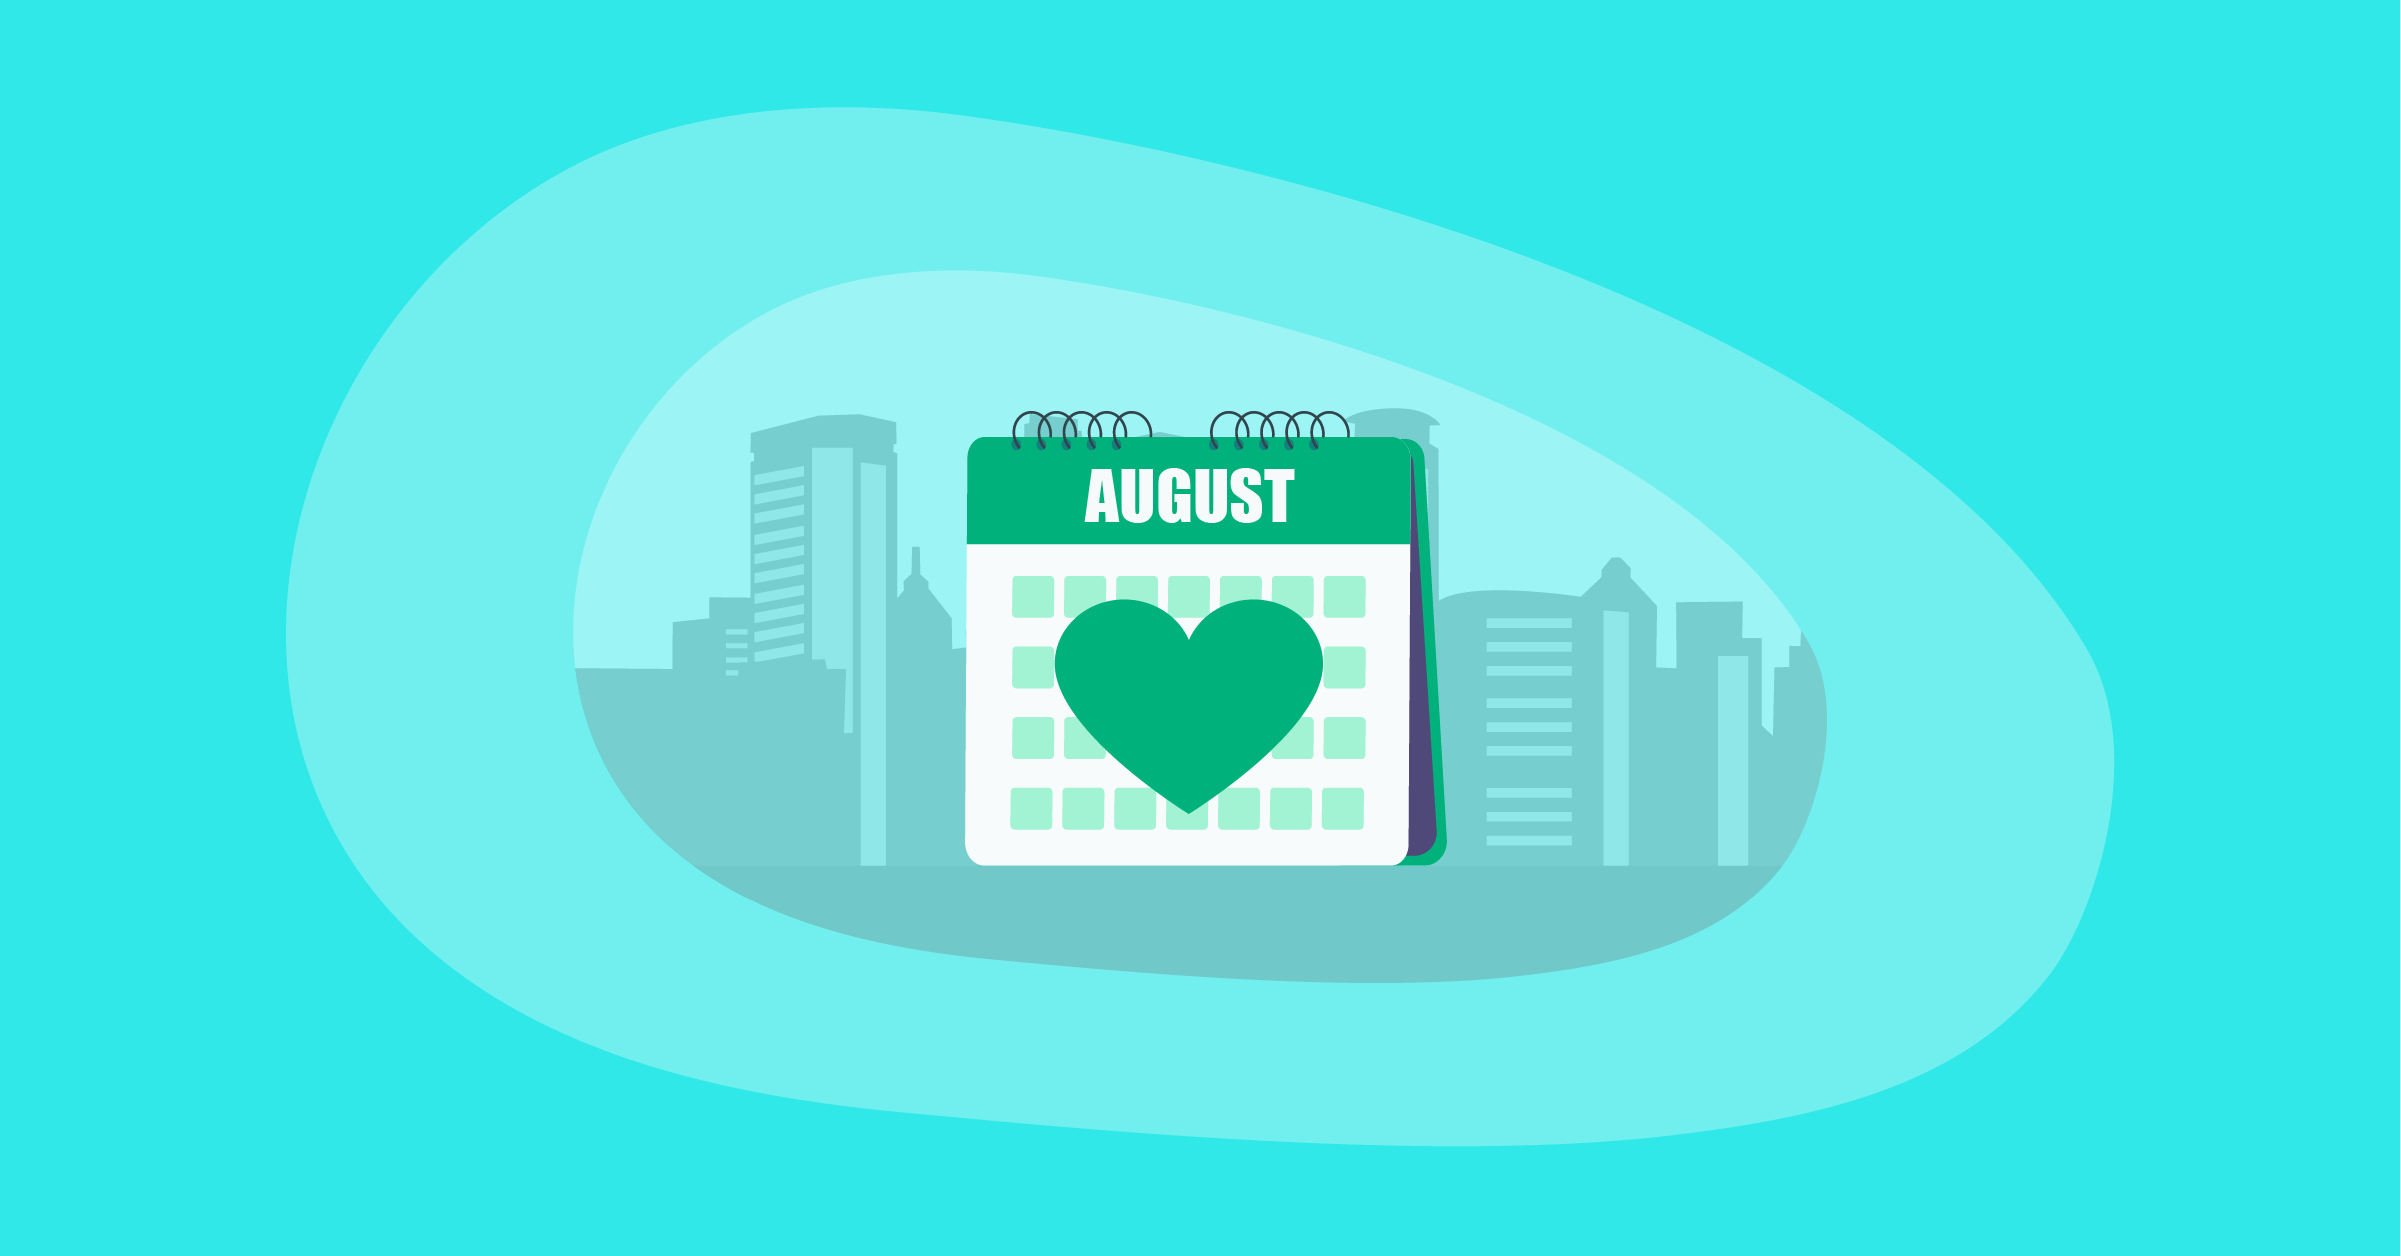 Illustration of an awareness calendar for August